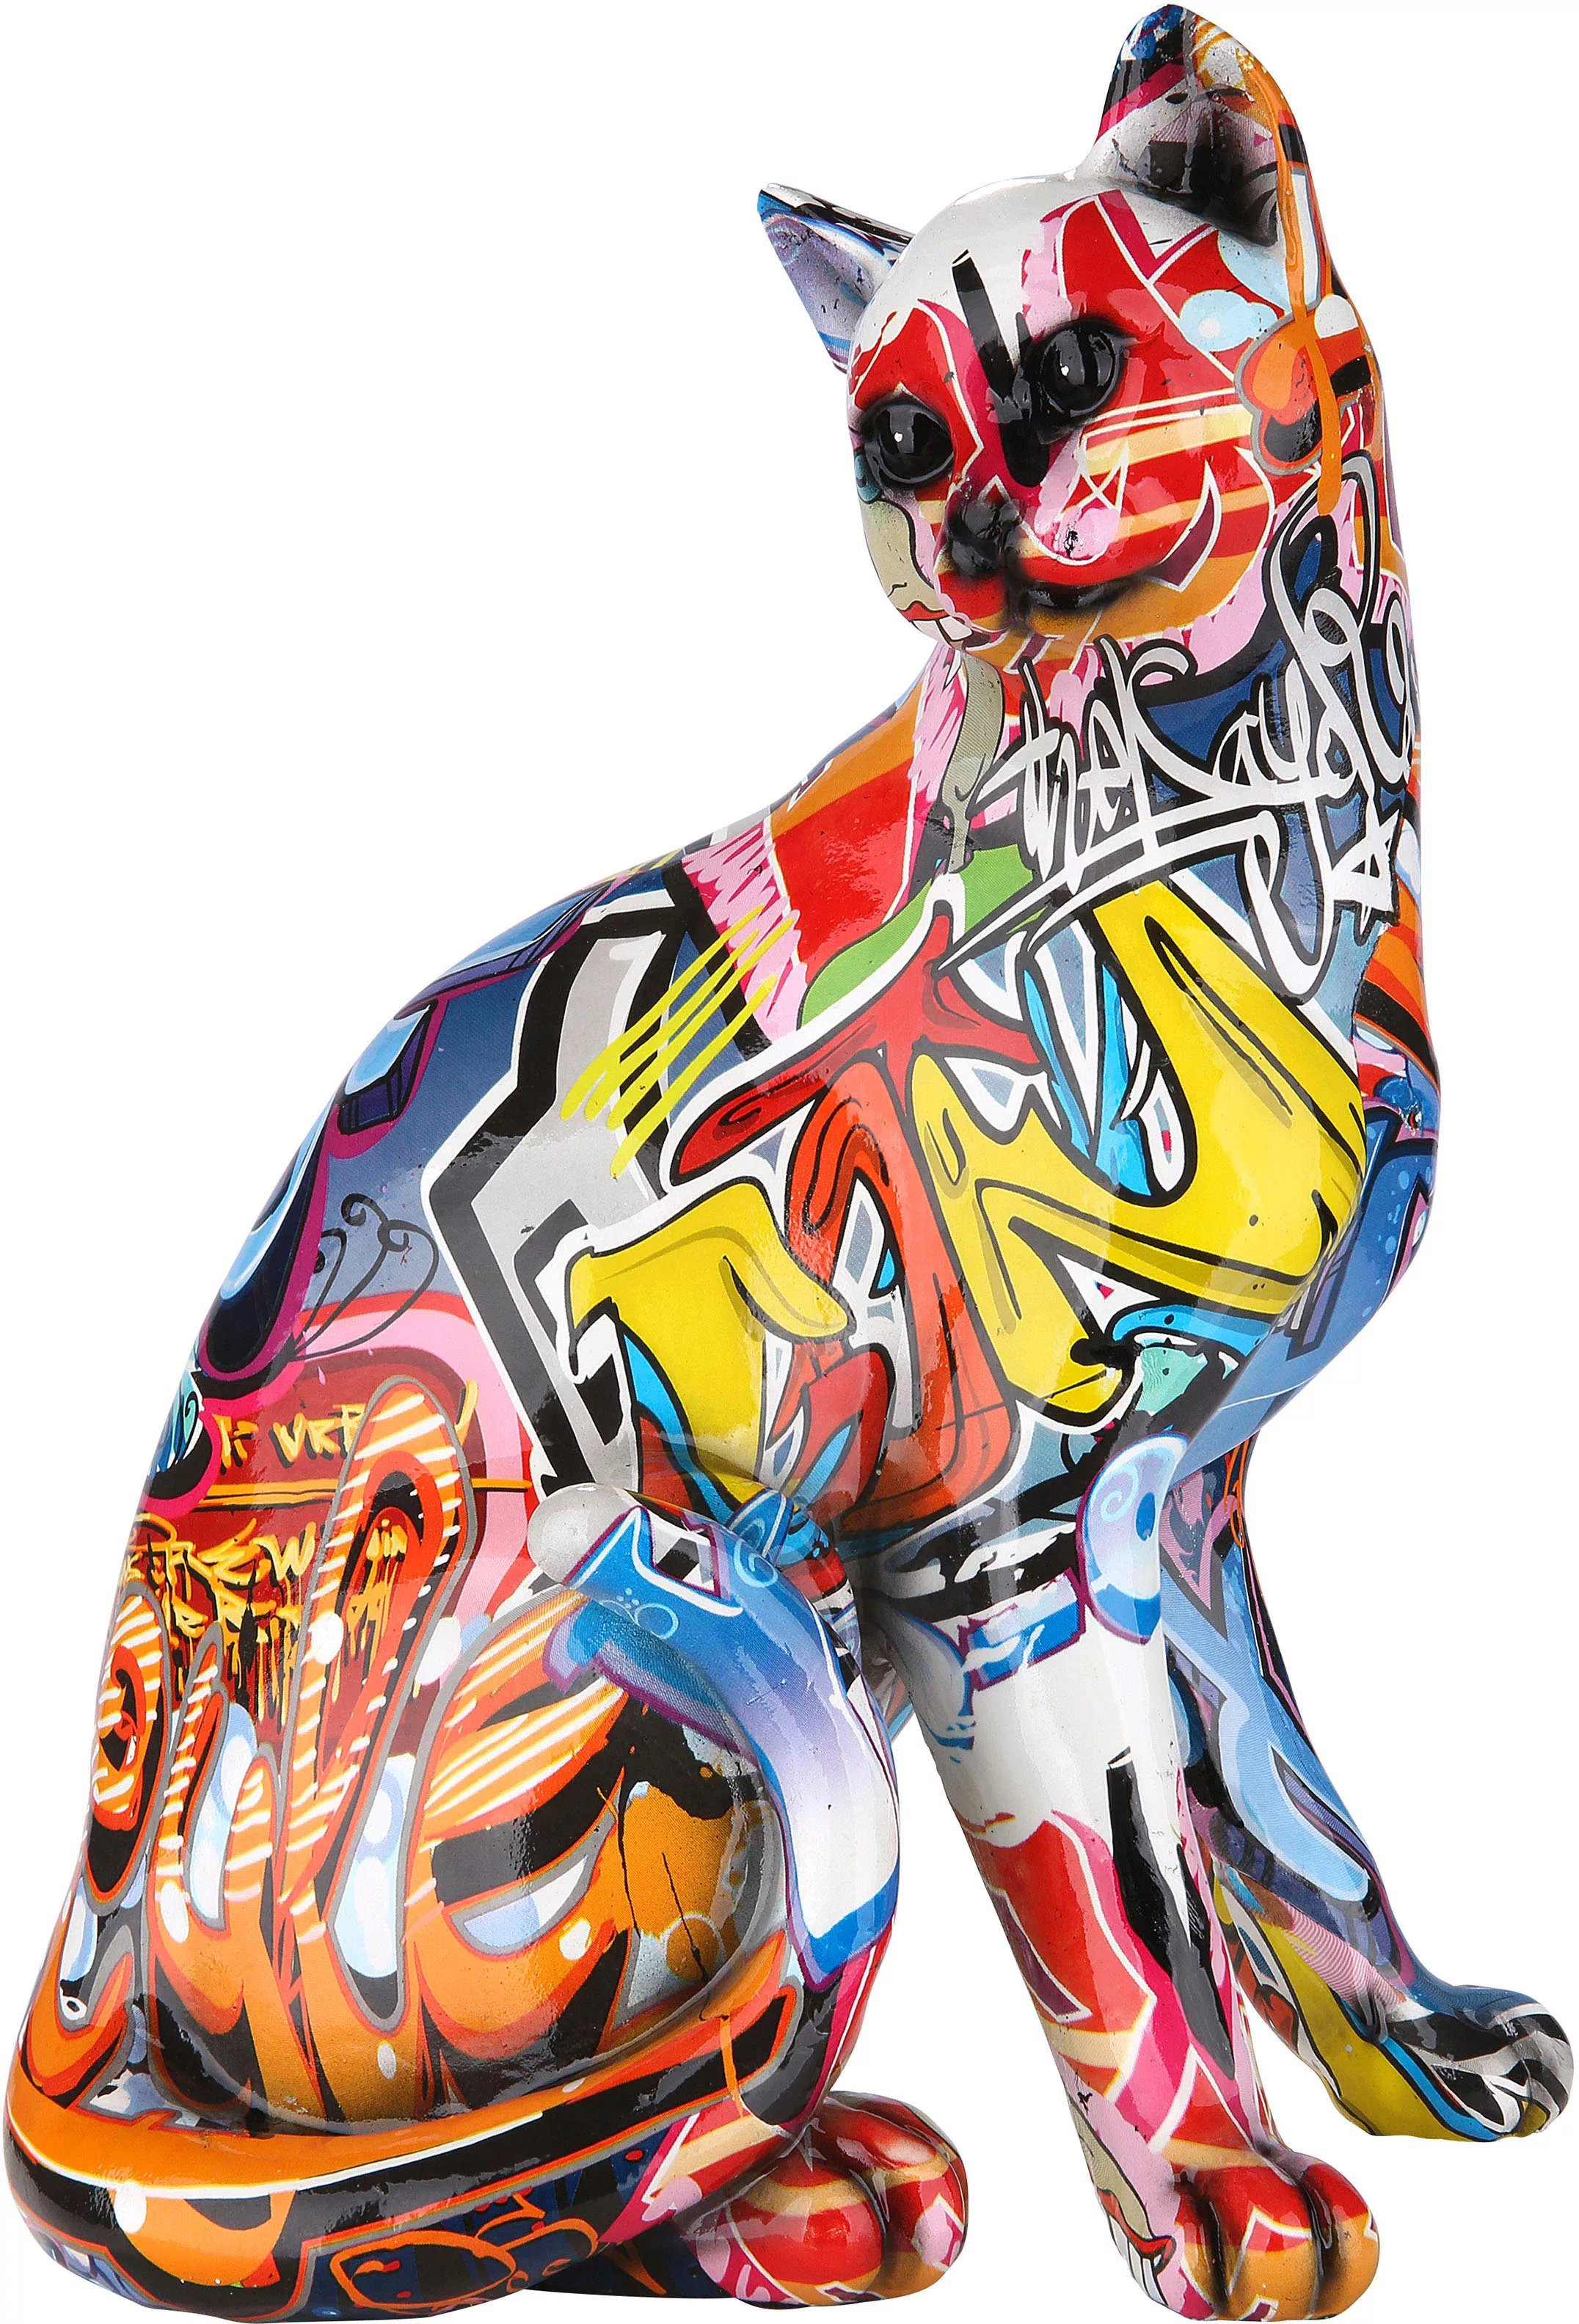 GILDE Dekofigur "Figur Pop Art Katze", Dekoobjekt, Tierfigur, Höhe 29 cm, W günstig online kaufen